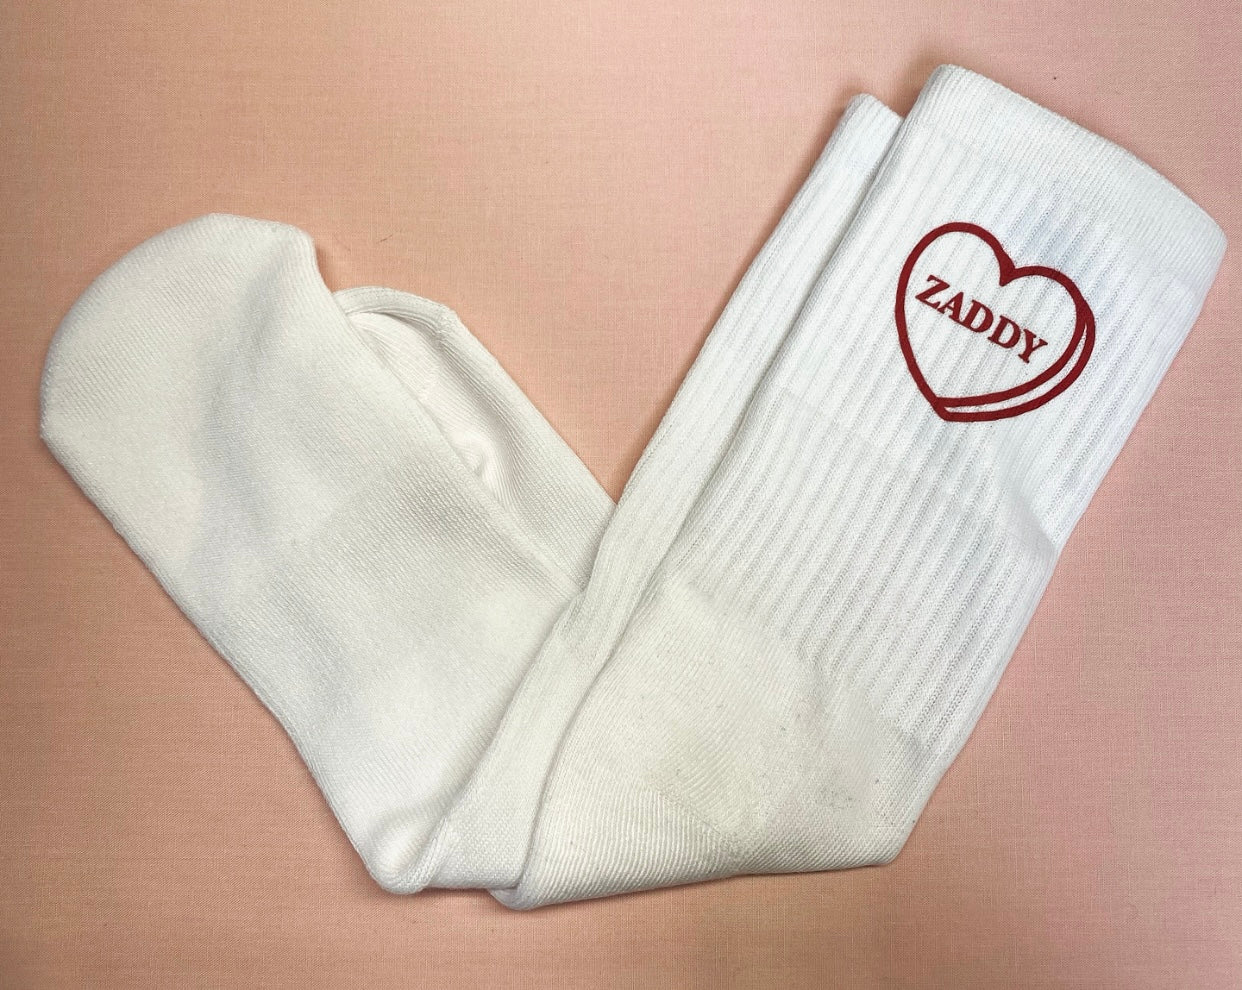 ZADDY Valentine's Day Socks